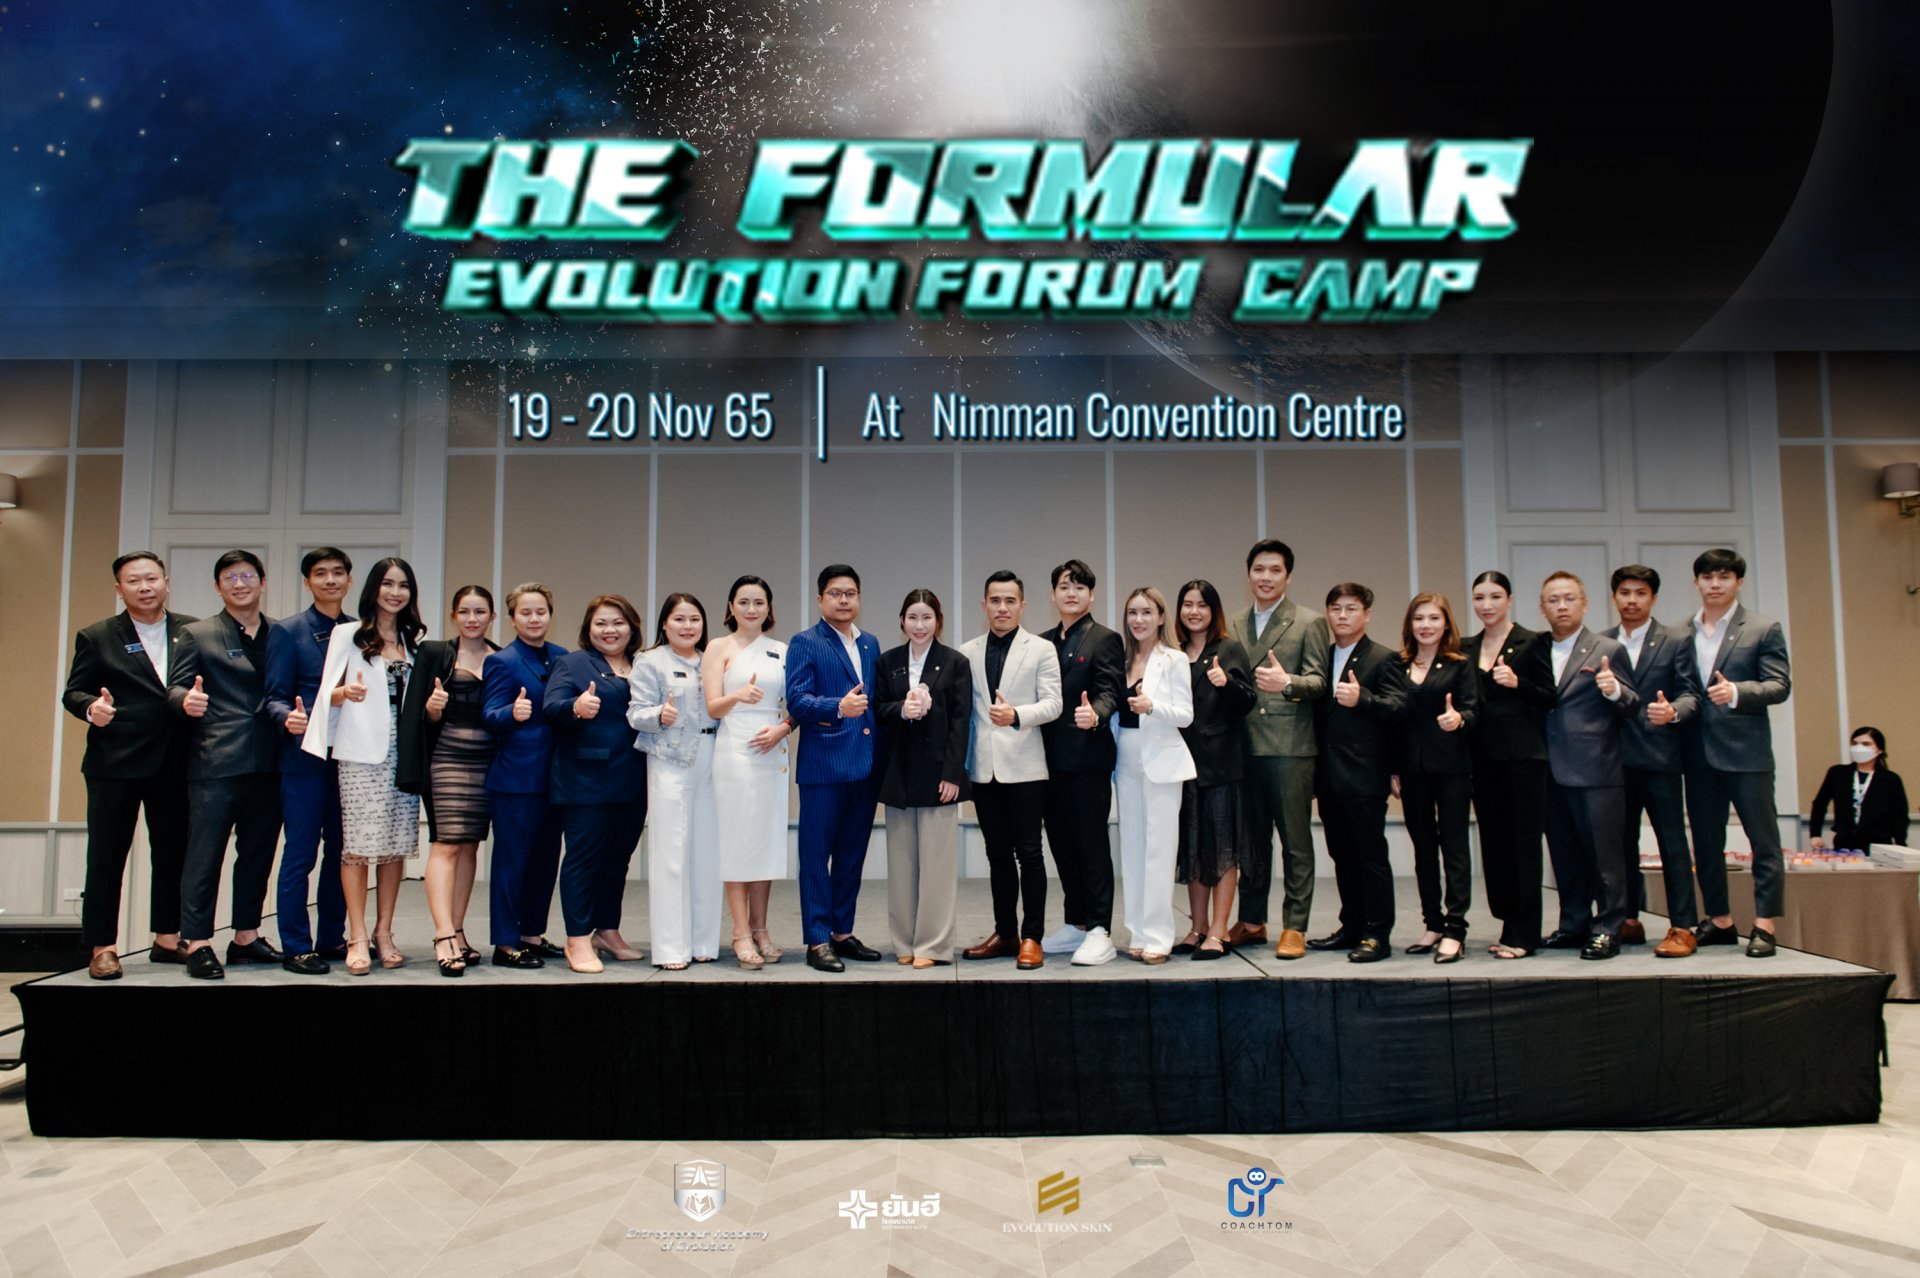 The Formular Evolution Forum Camp